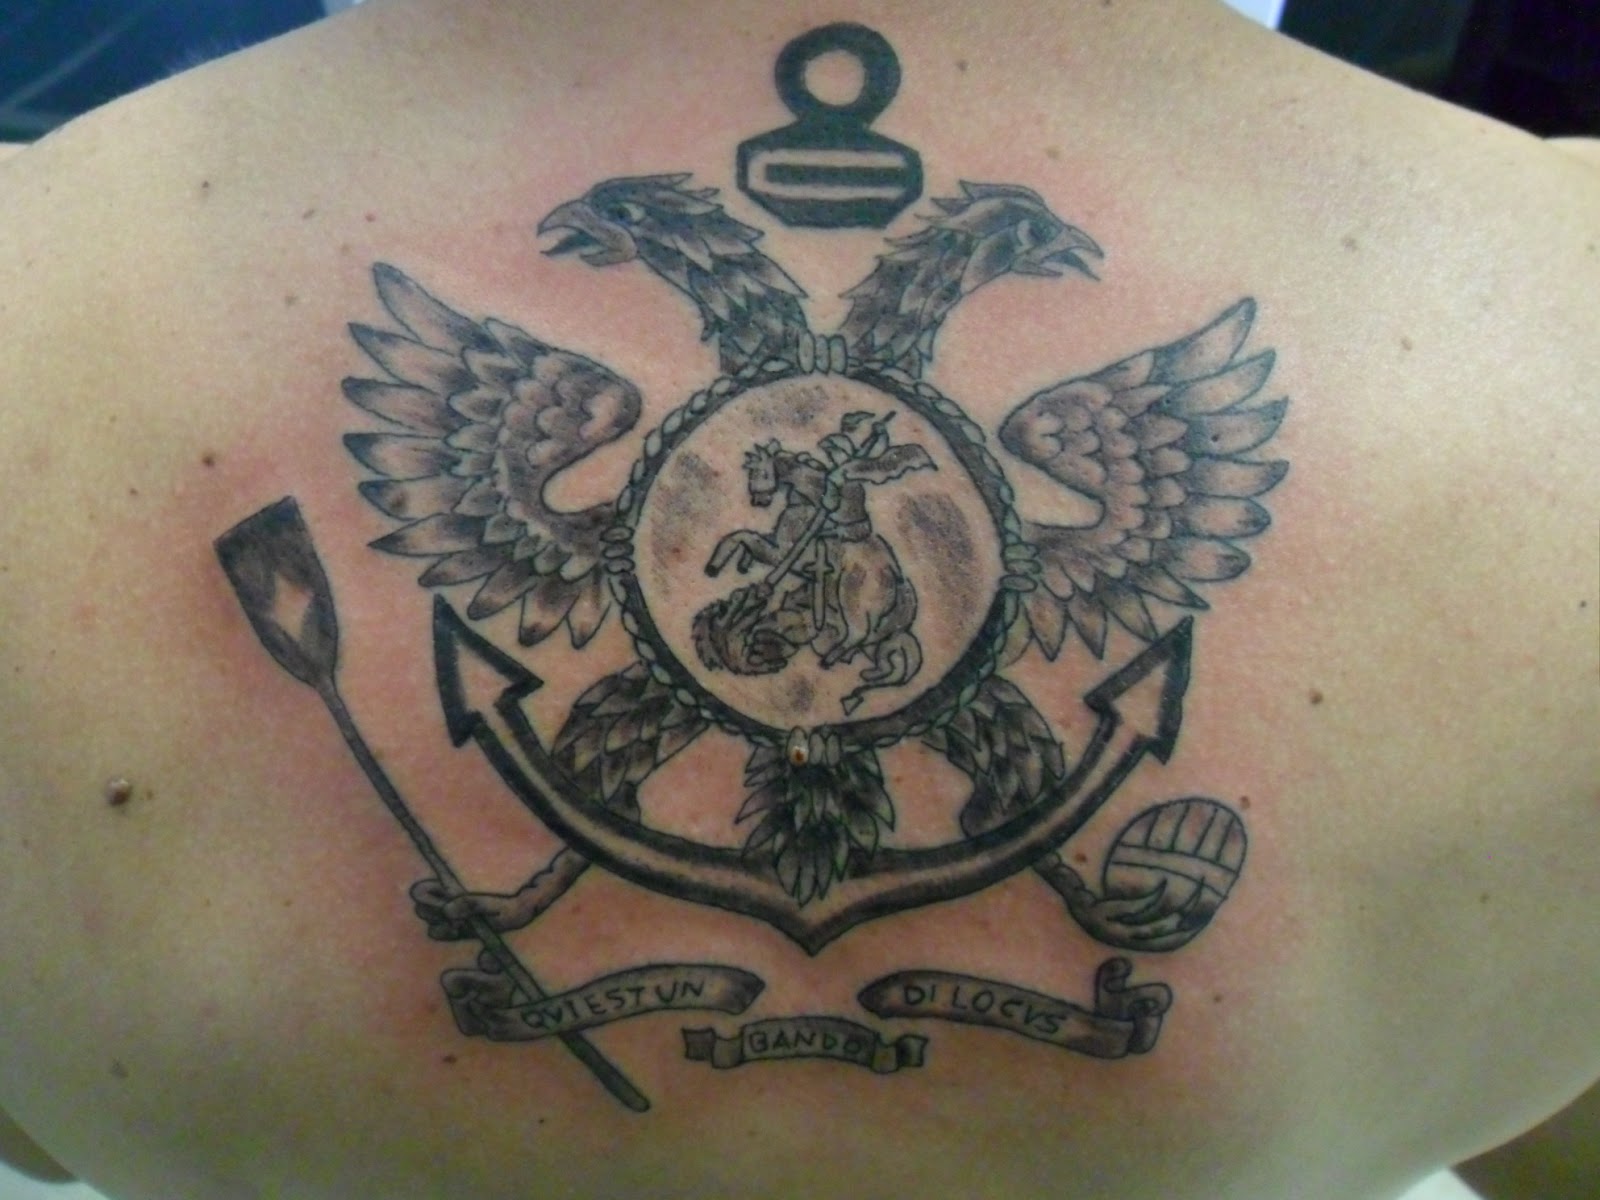 Leco's Tattoo: Simbolo do corinthians